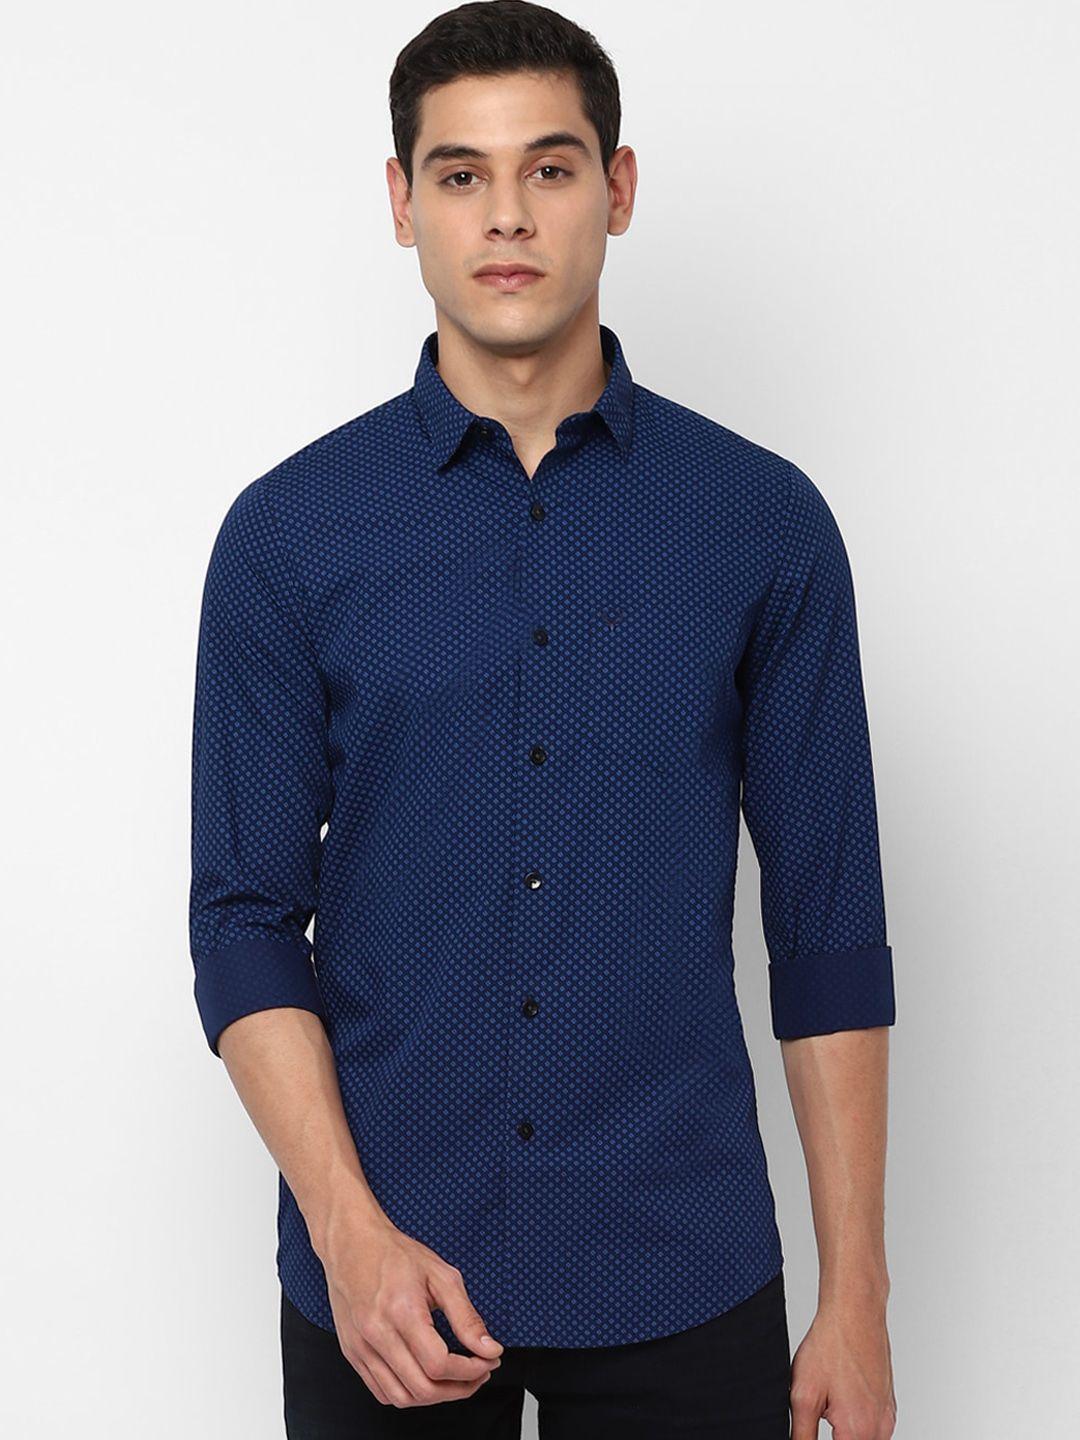 allen solly men navy blue slim fit printed cotton casual shirt